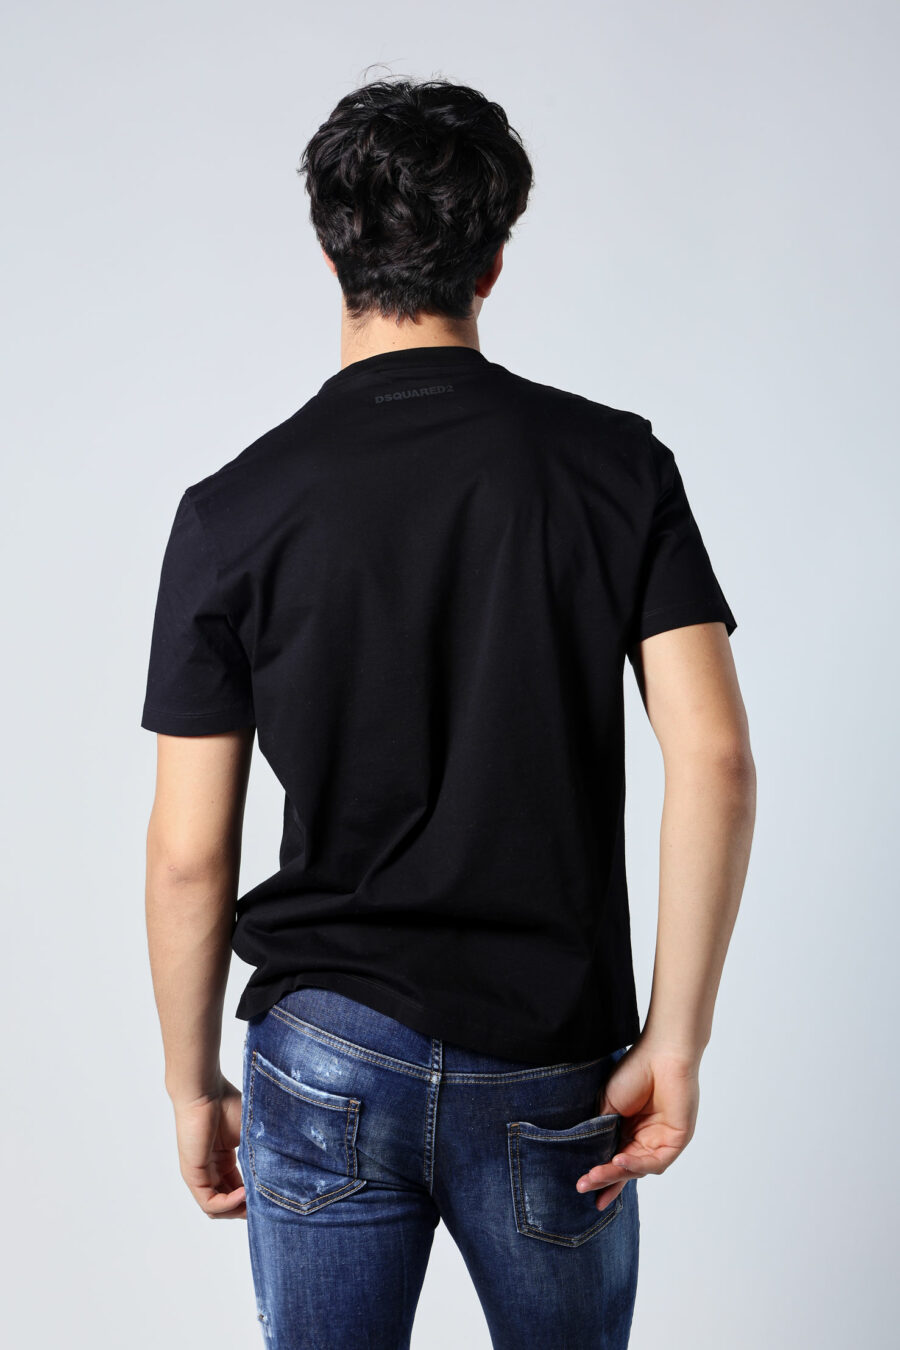 T-shirt preta com logótipo "icon" axadrezado branco - Untitled Catalog 05675